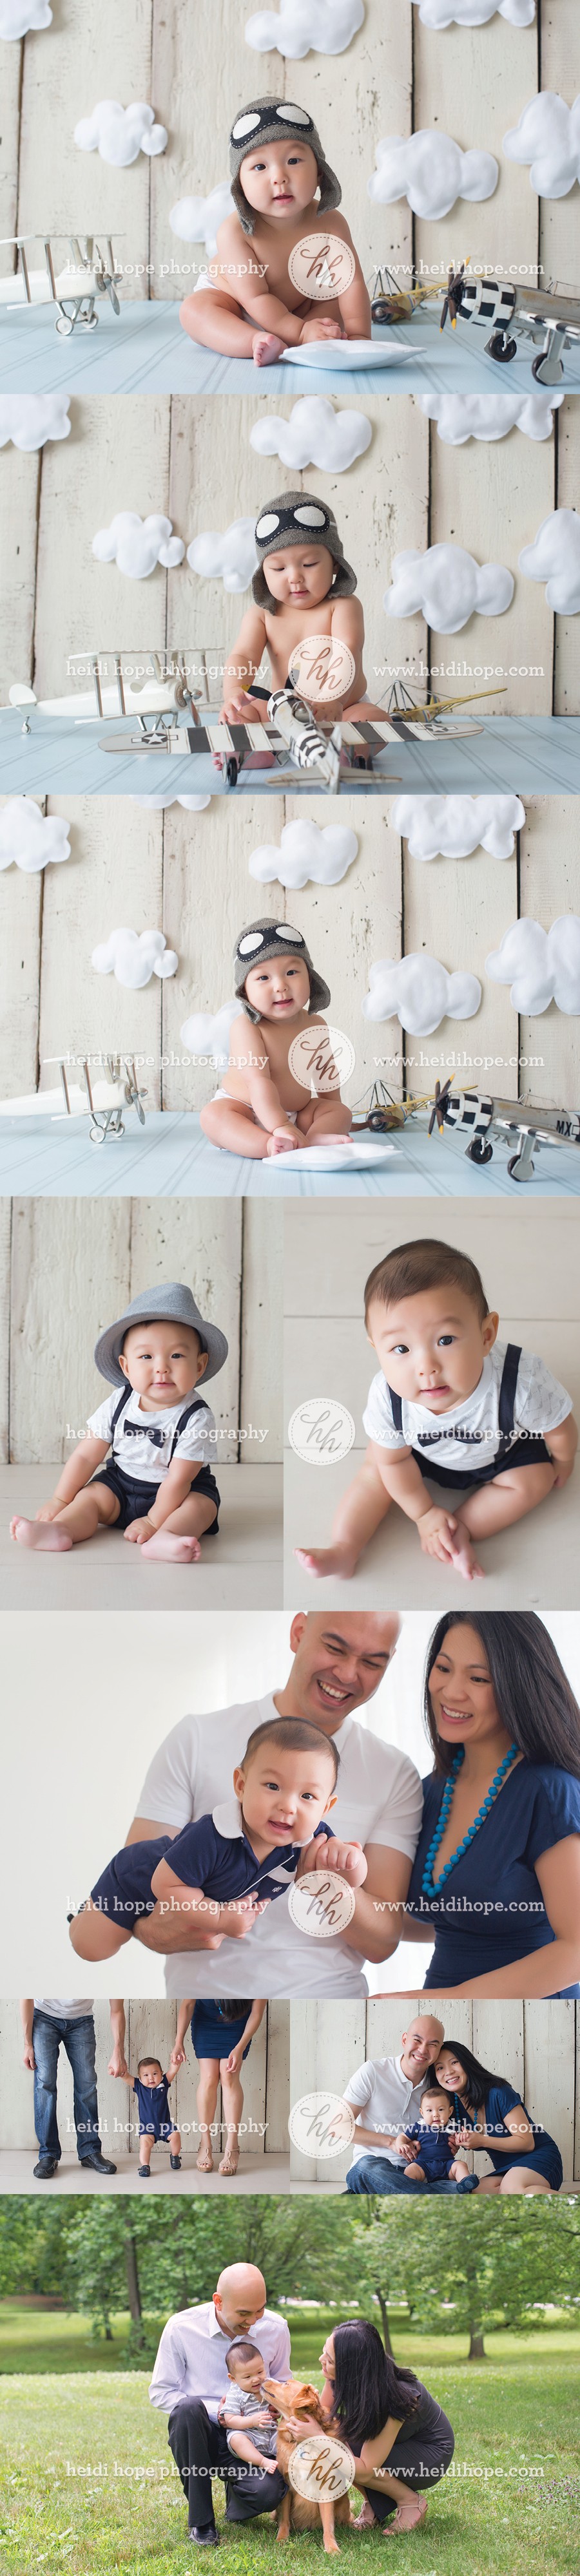 Baby aviator photo set by Heidi Hope Photography #planes #baby #aviator #theme #set